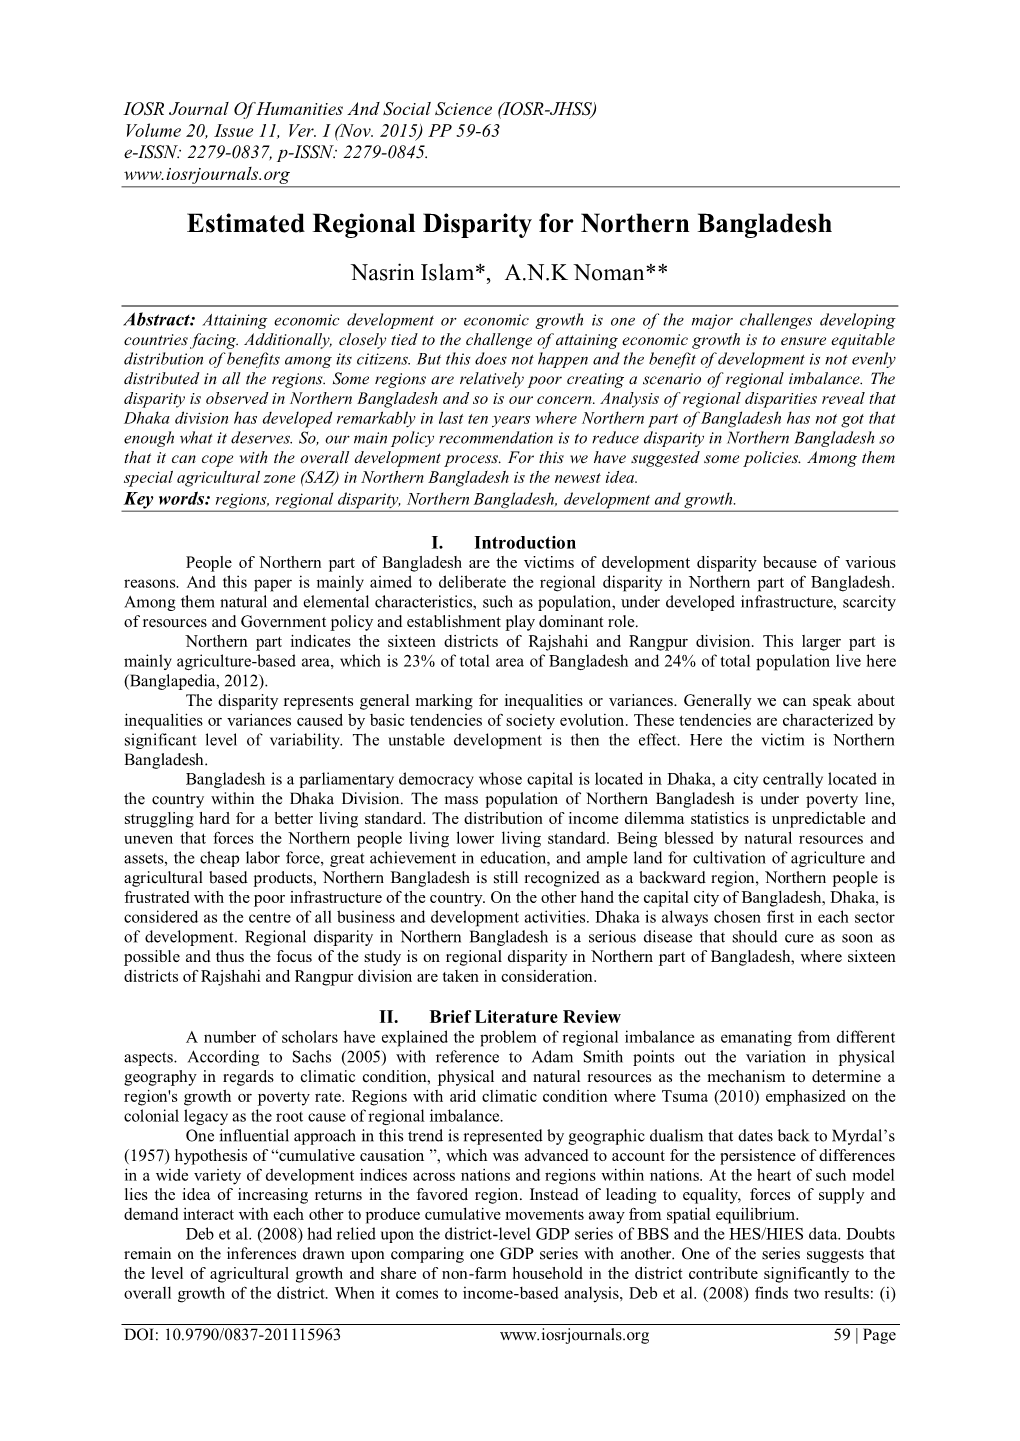 Estimated Regional Disparity for Northern Bangladesh